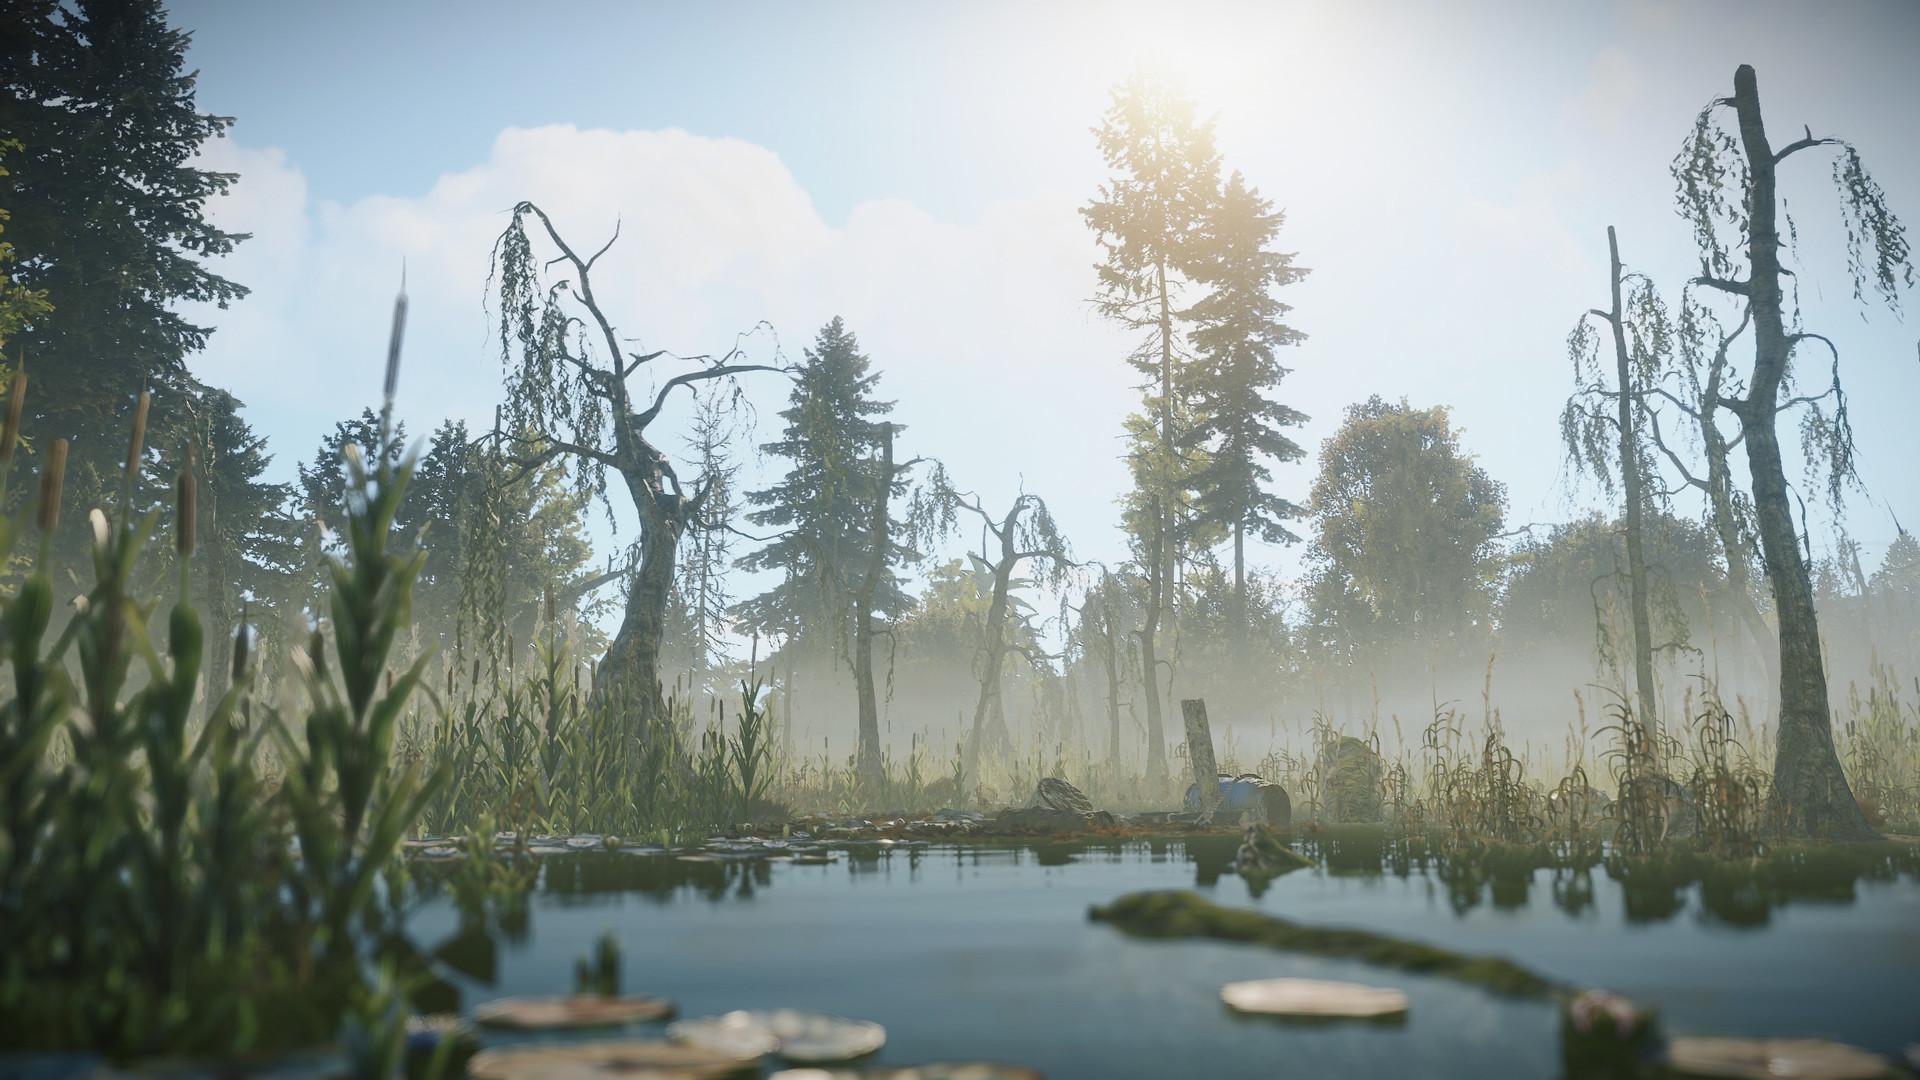 Screenshot №32 from game Rust